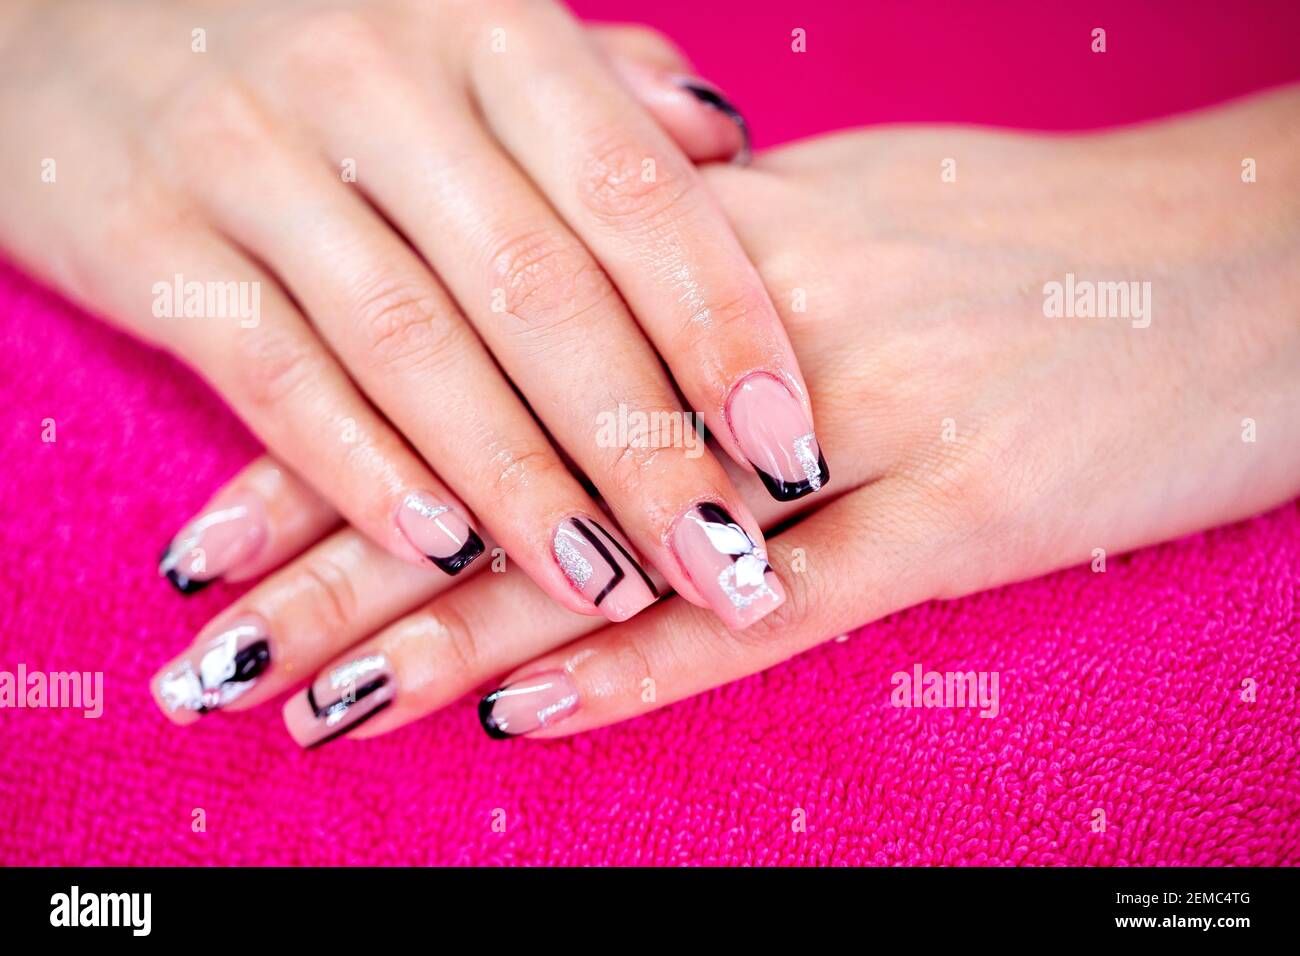 stylish nail art design manicure for women concept of pretty nails 2EMC4TG